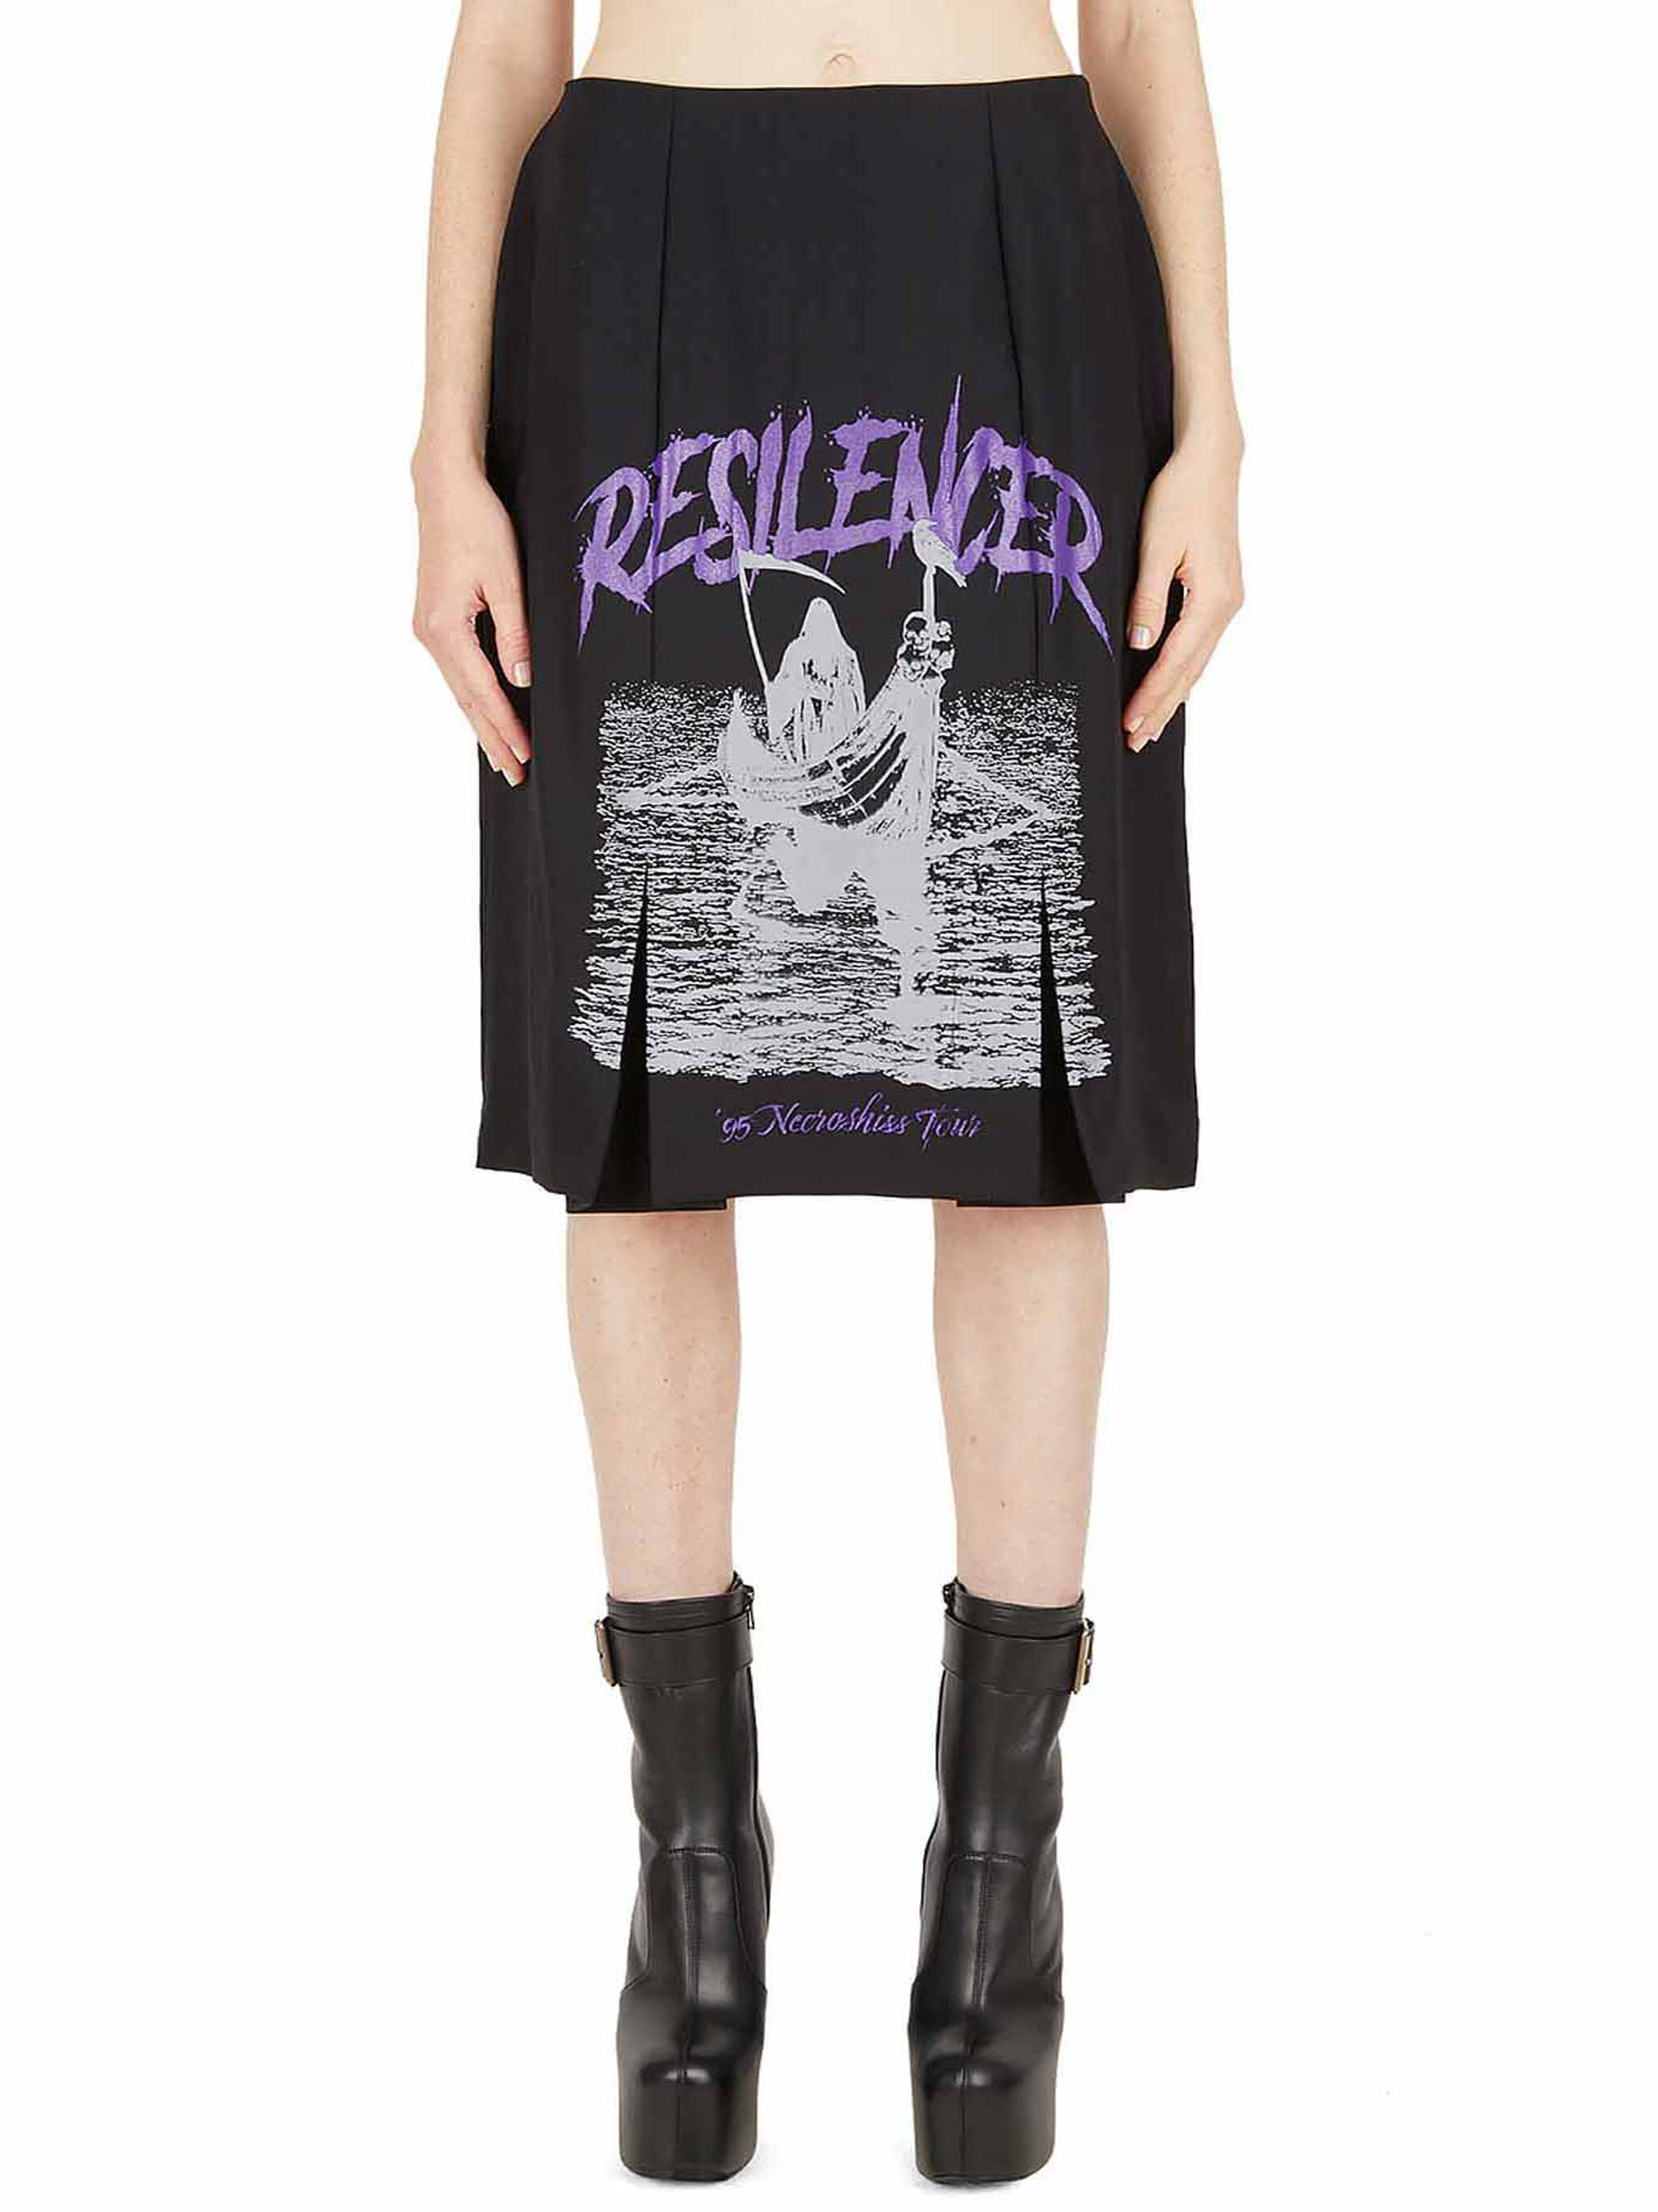 Raf Simons Resilencer Print Pleated Skirt | THE FLAMEL®